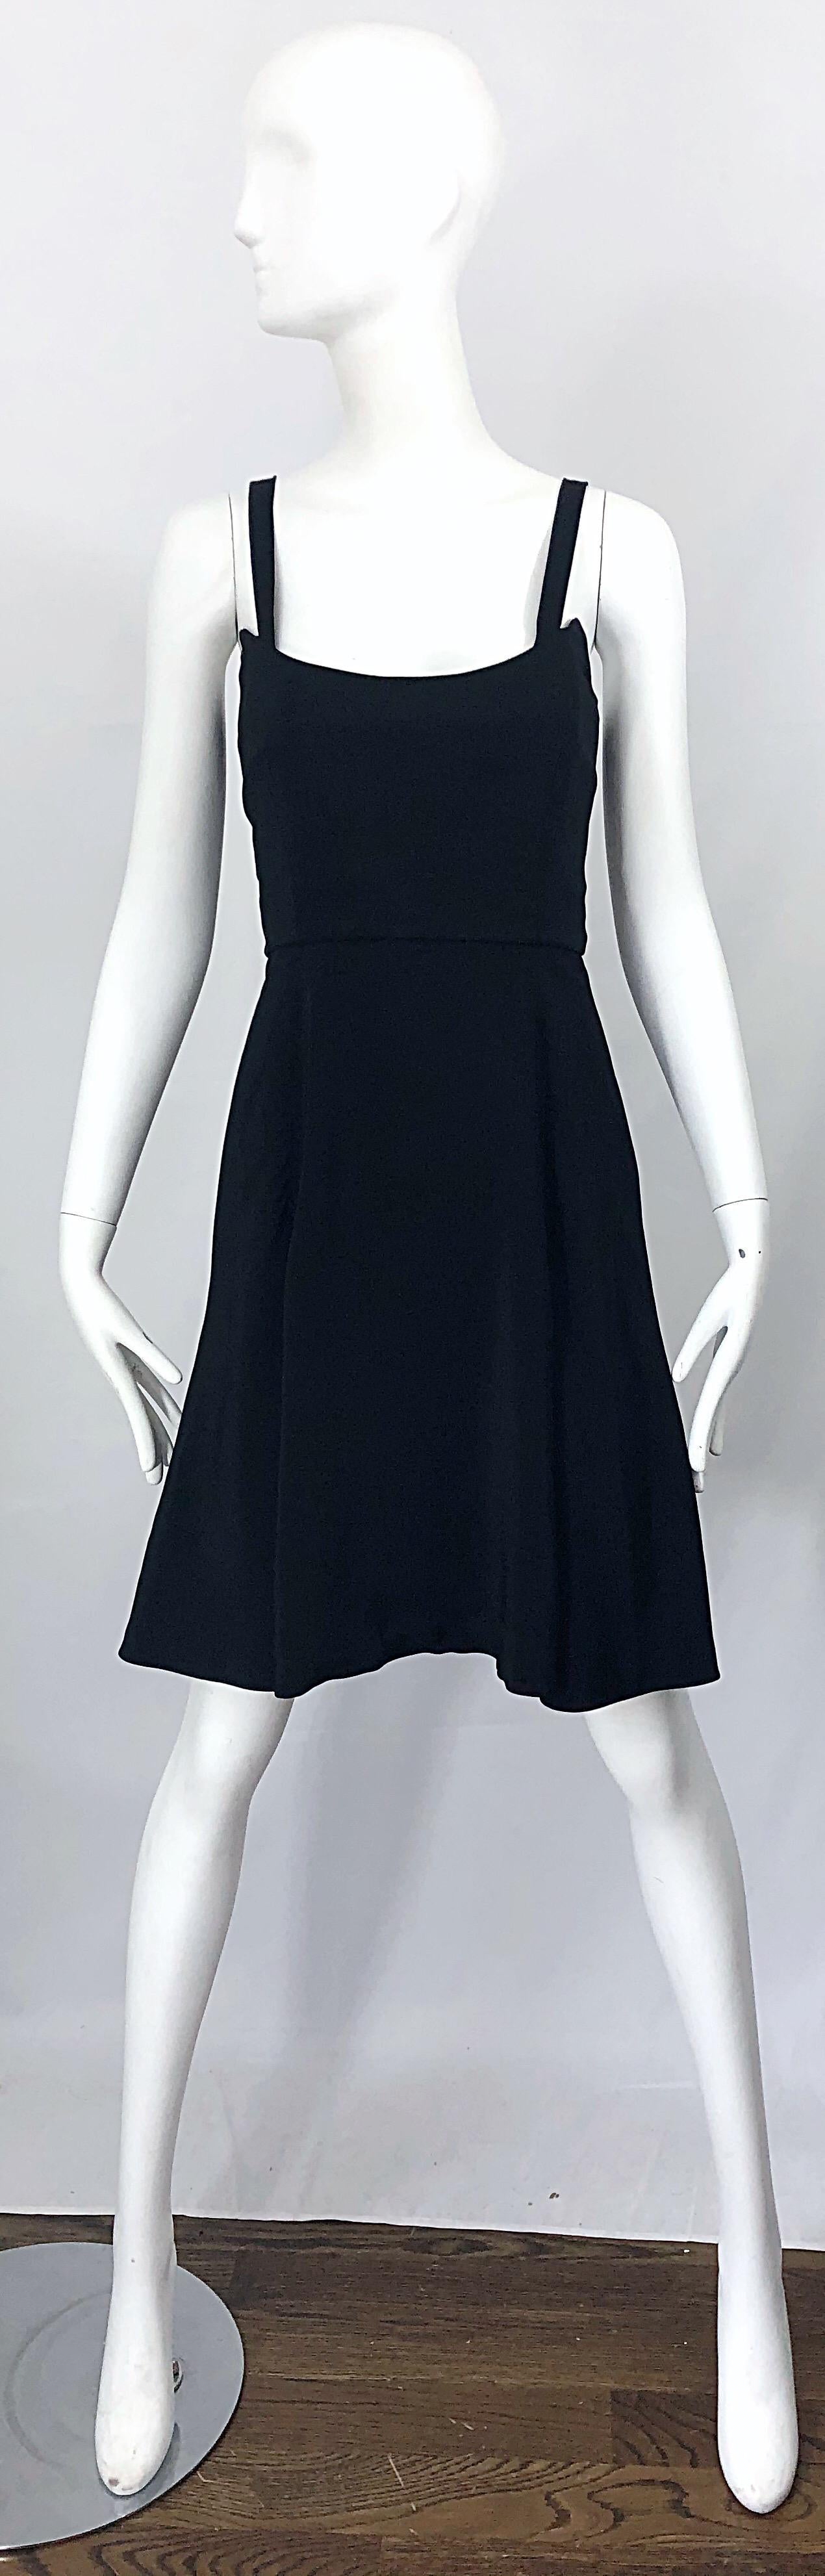 1990s Christian Lacroix Avant Garde Size 36 2 /4 Vintage Black 90s Skater Dress For Sale 5